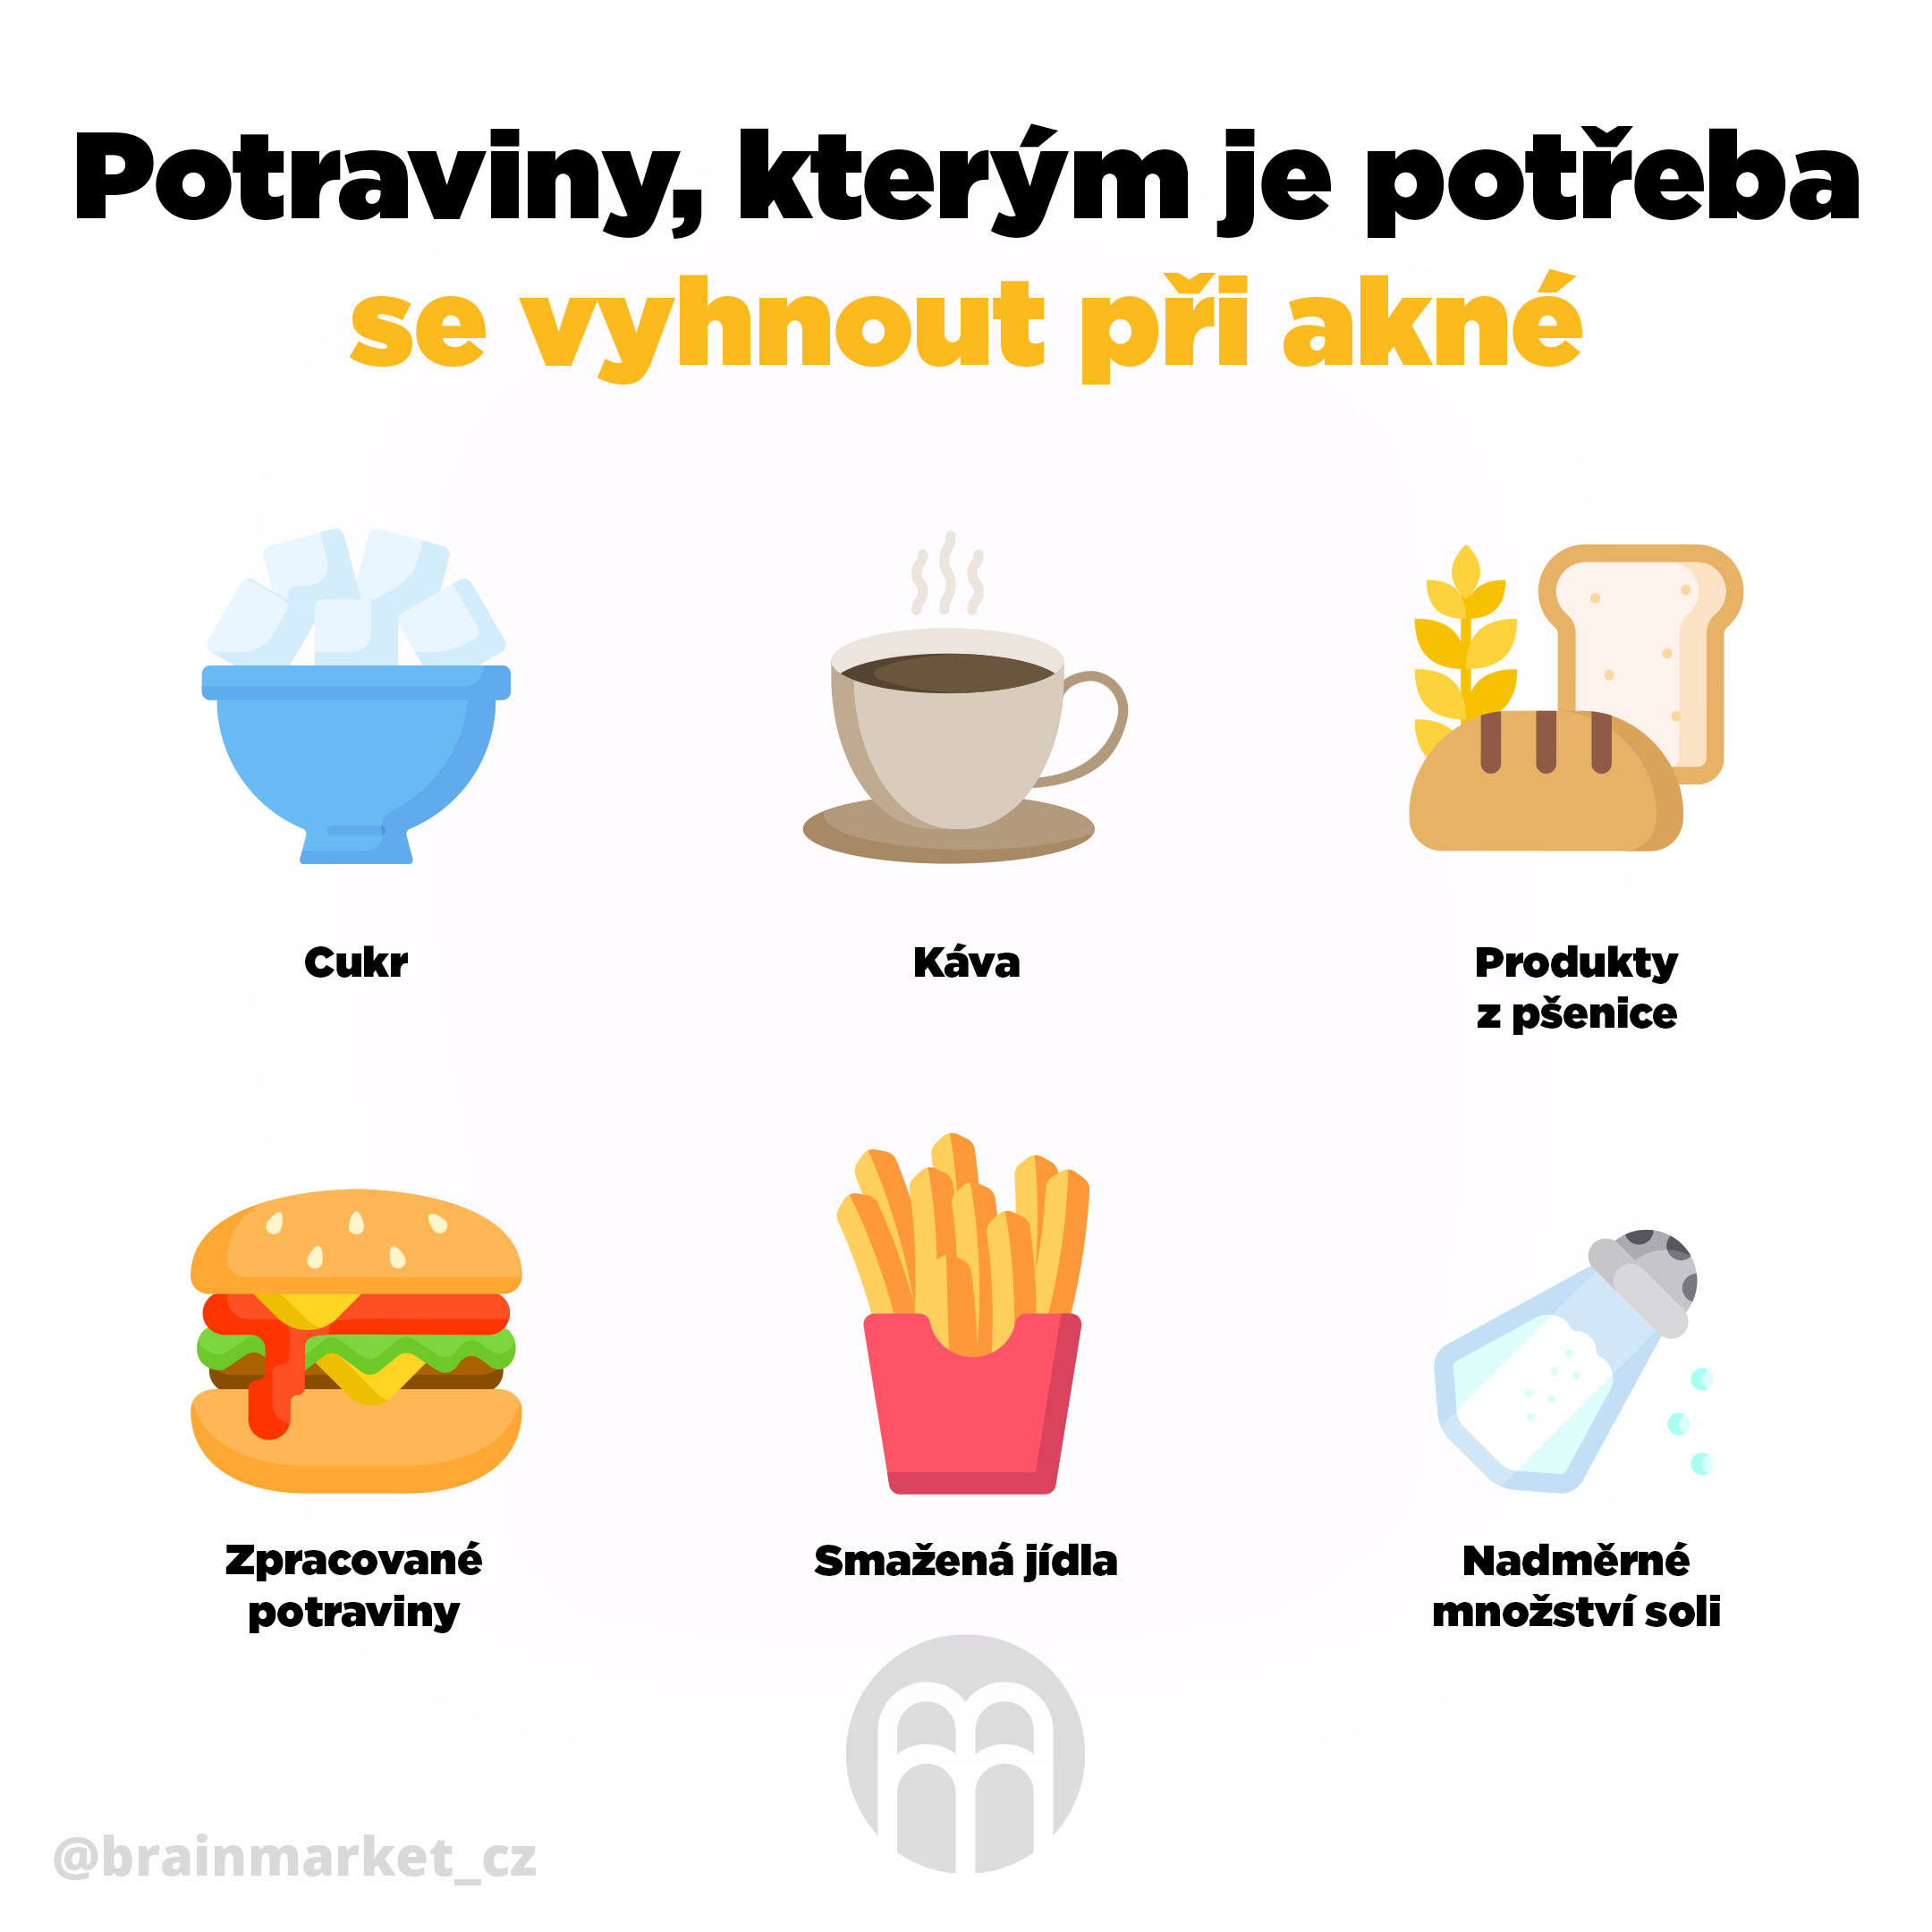 potraviny_vyhnout_pri_akne_infografika_brainmarket_cz